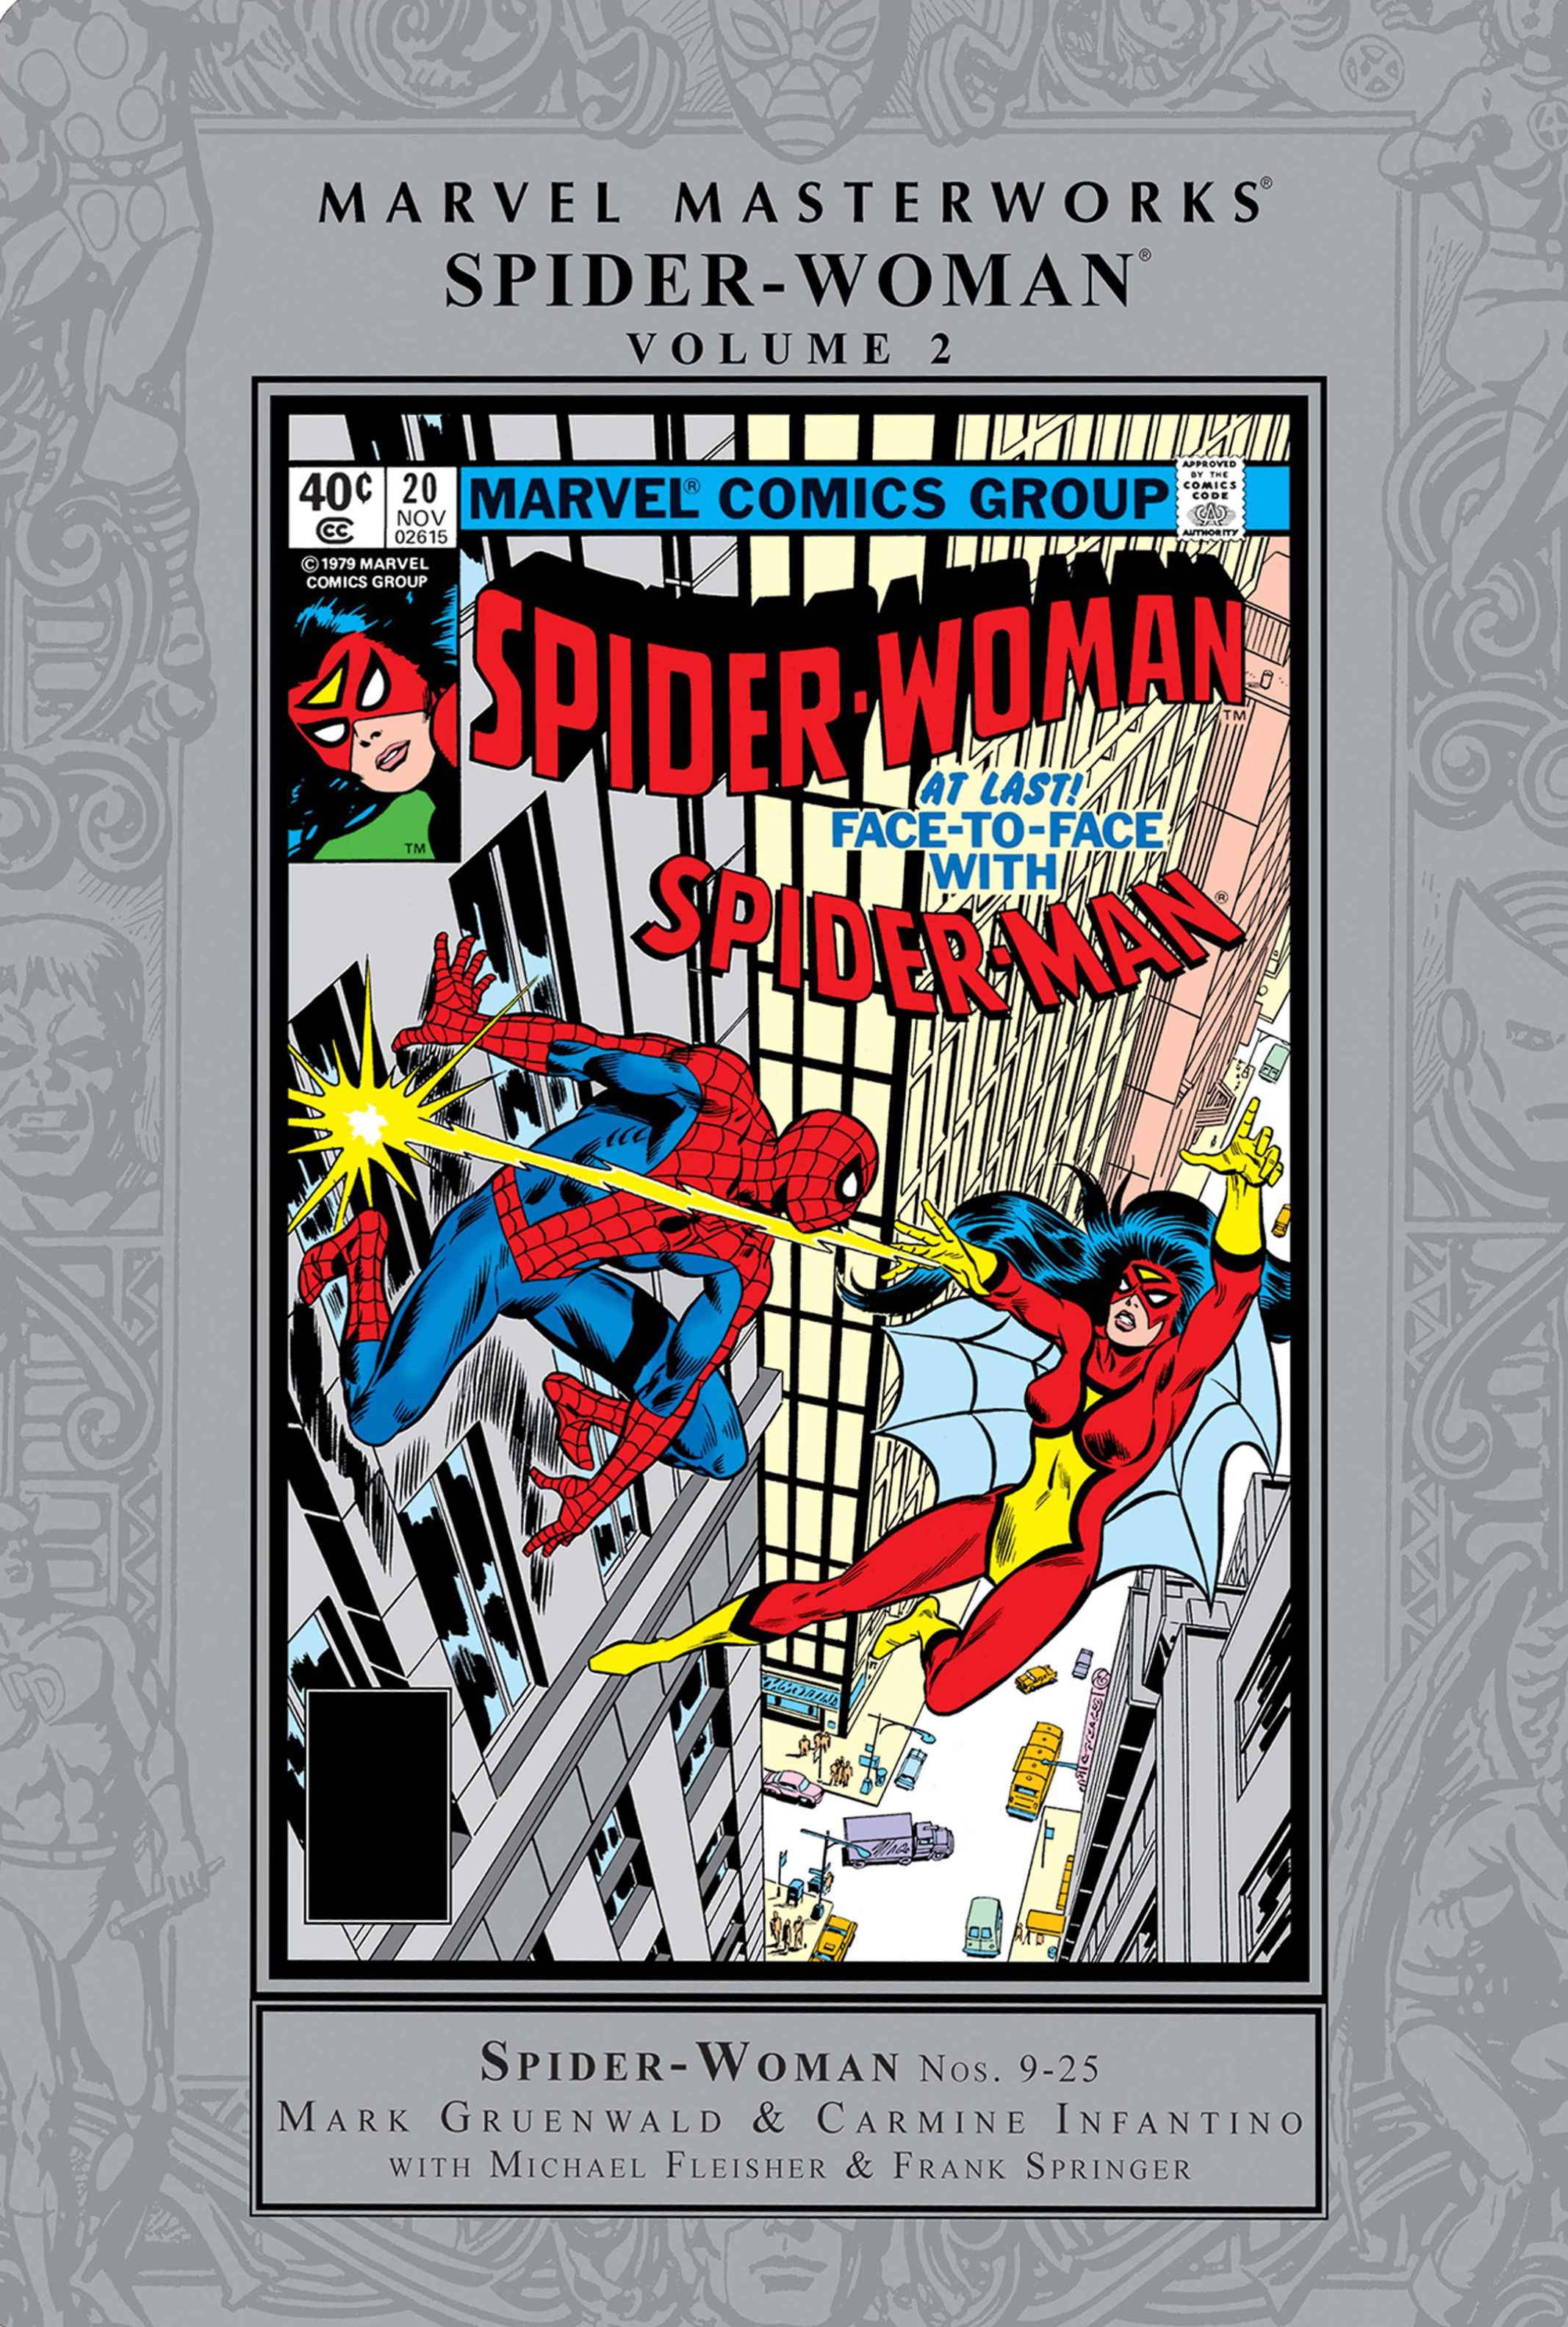 Marvel Masterworks Spider-Woman Hardcover Volume 2